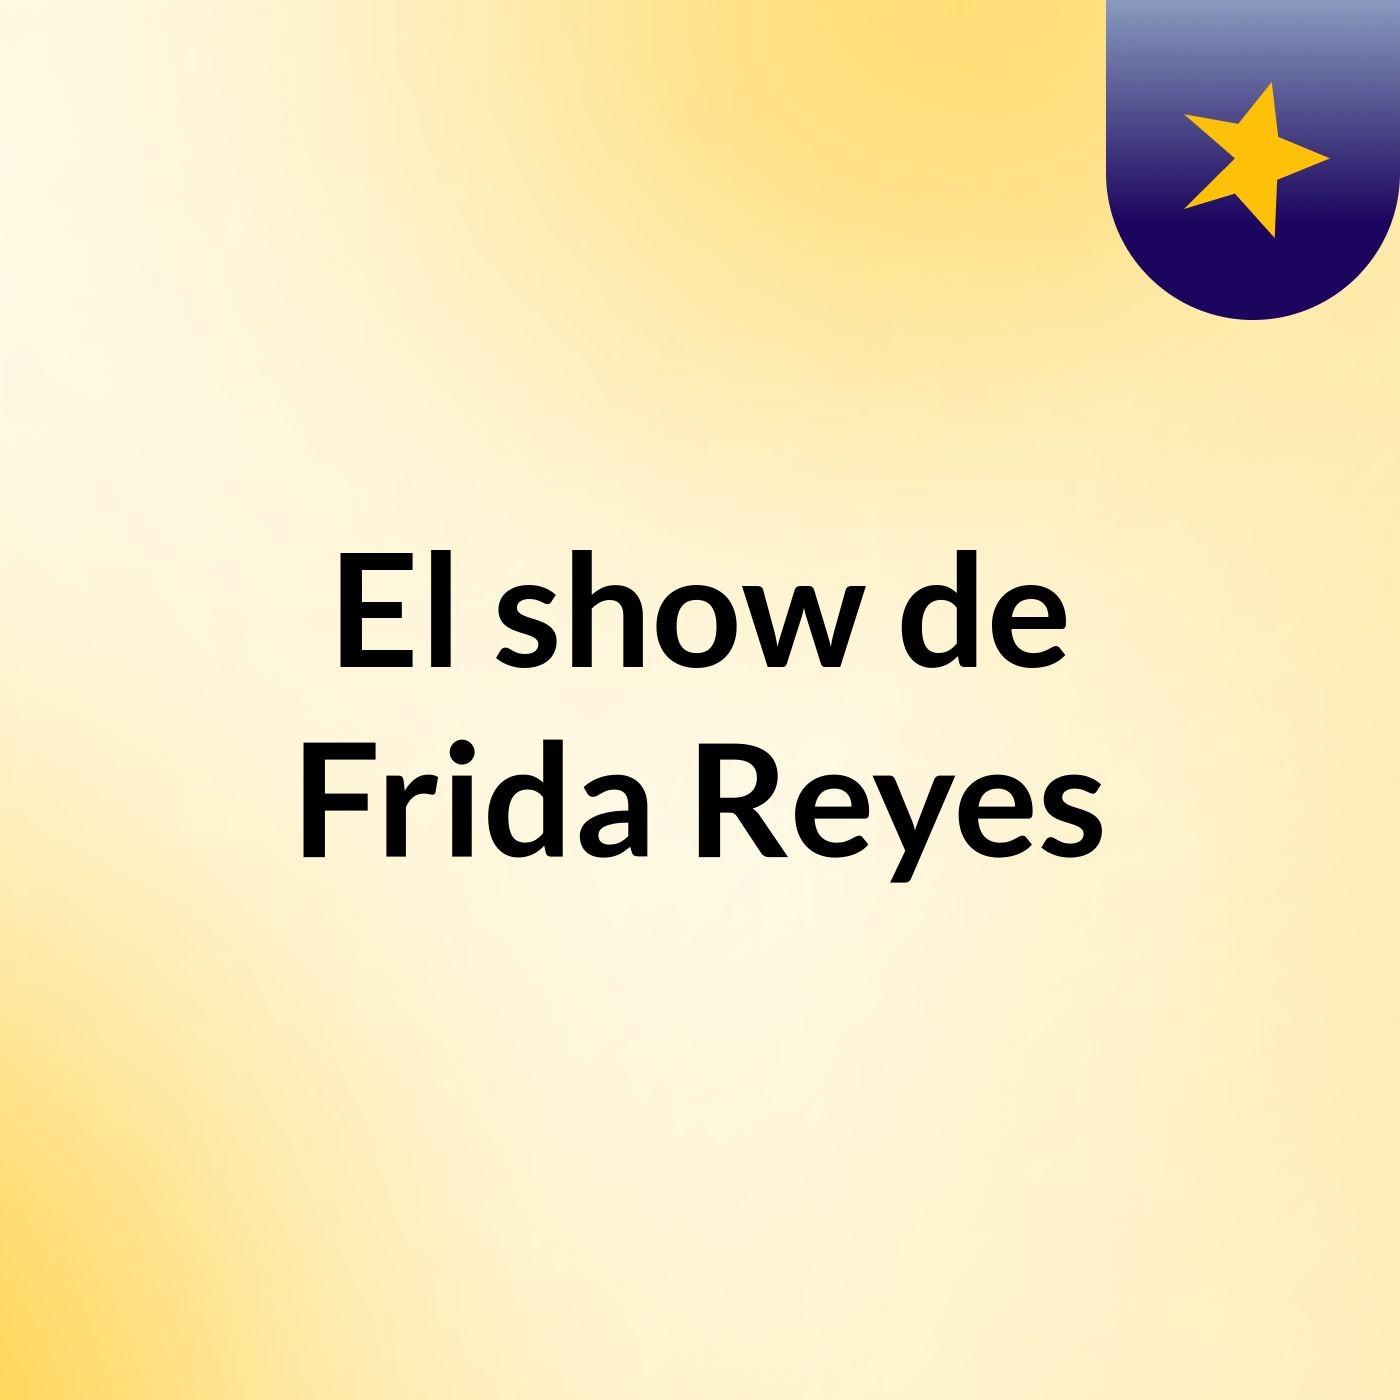 El show de Frida Reyes